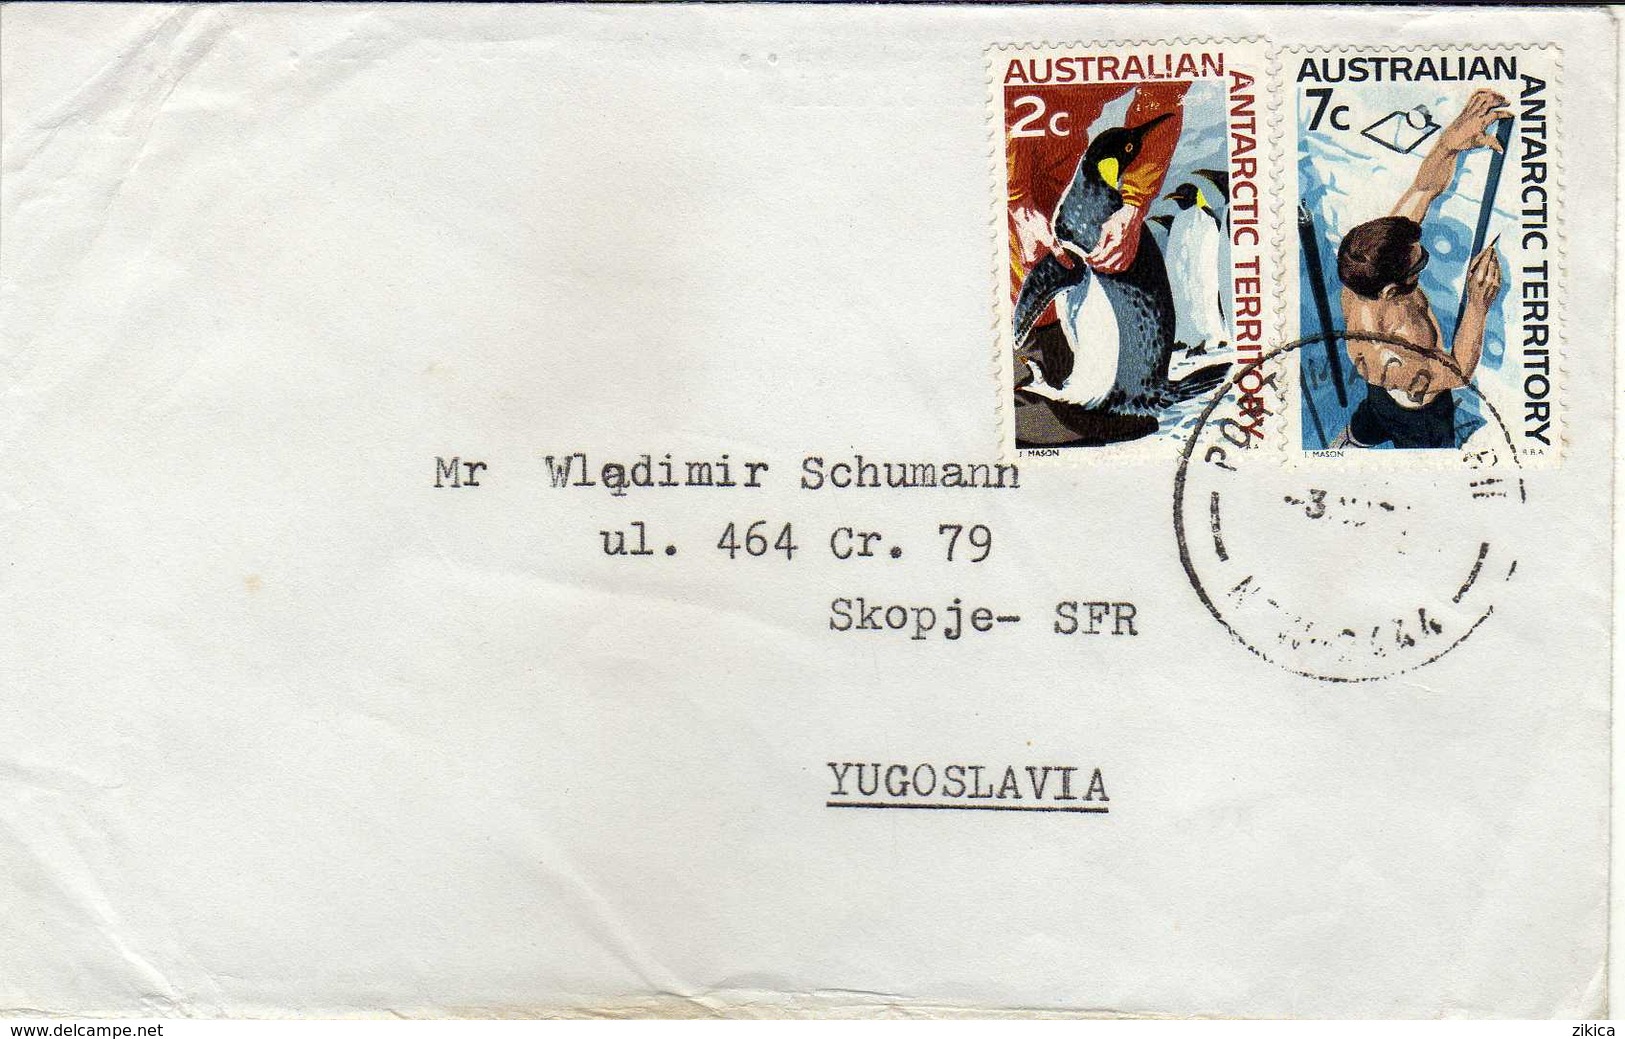 Antarctica - Australian Antarctic Territory (AAT) Via Yugoslavia,Macedonia - Nice Stamps - Marine Life/Penguins - Covers & Documents